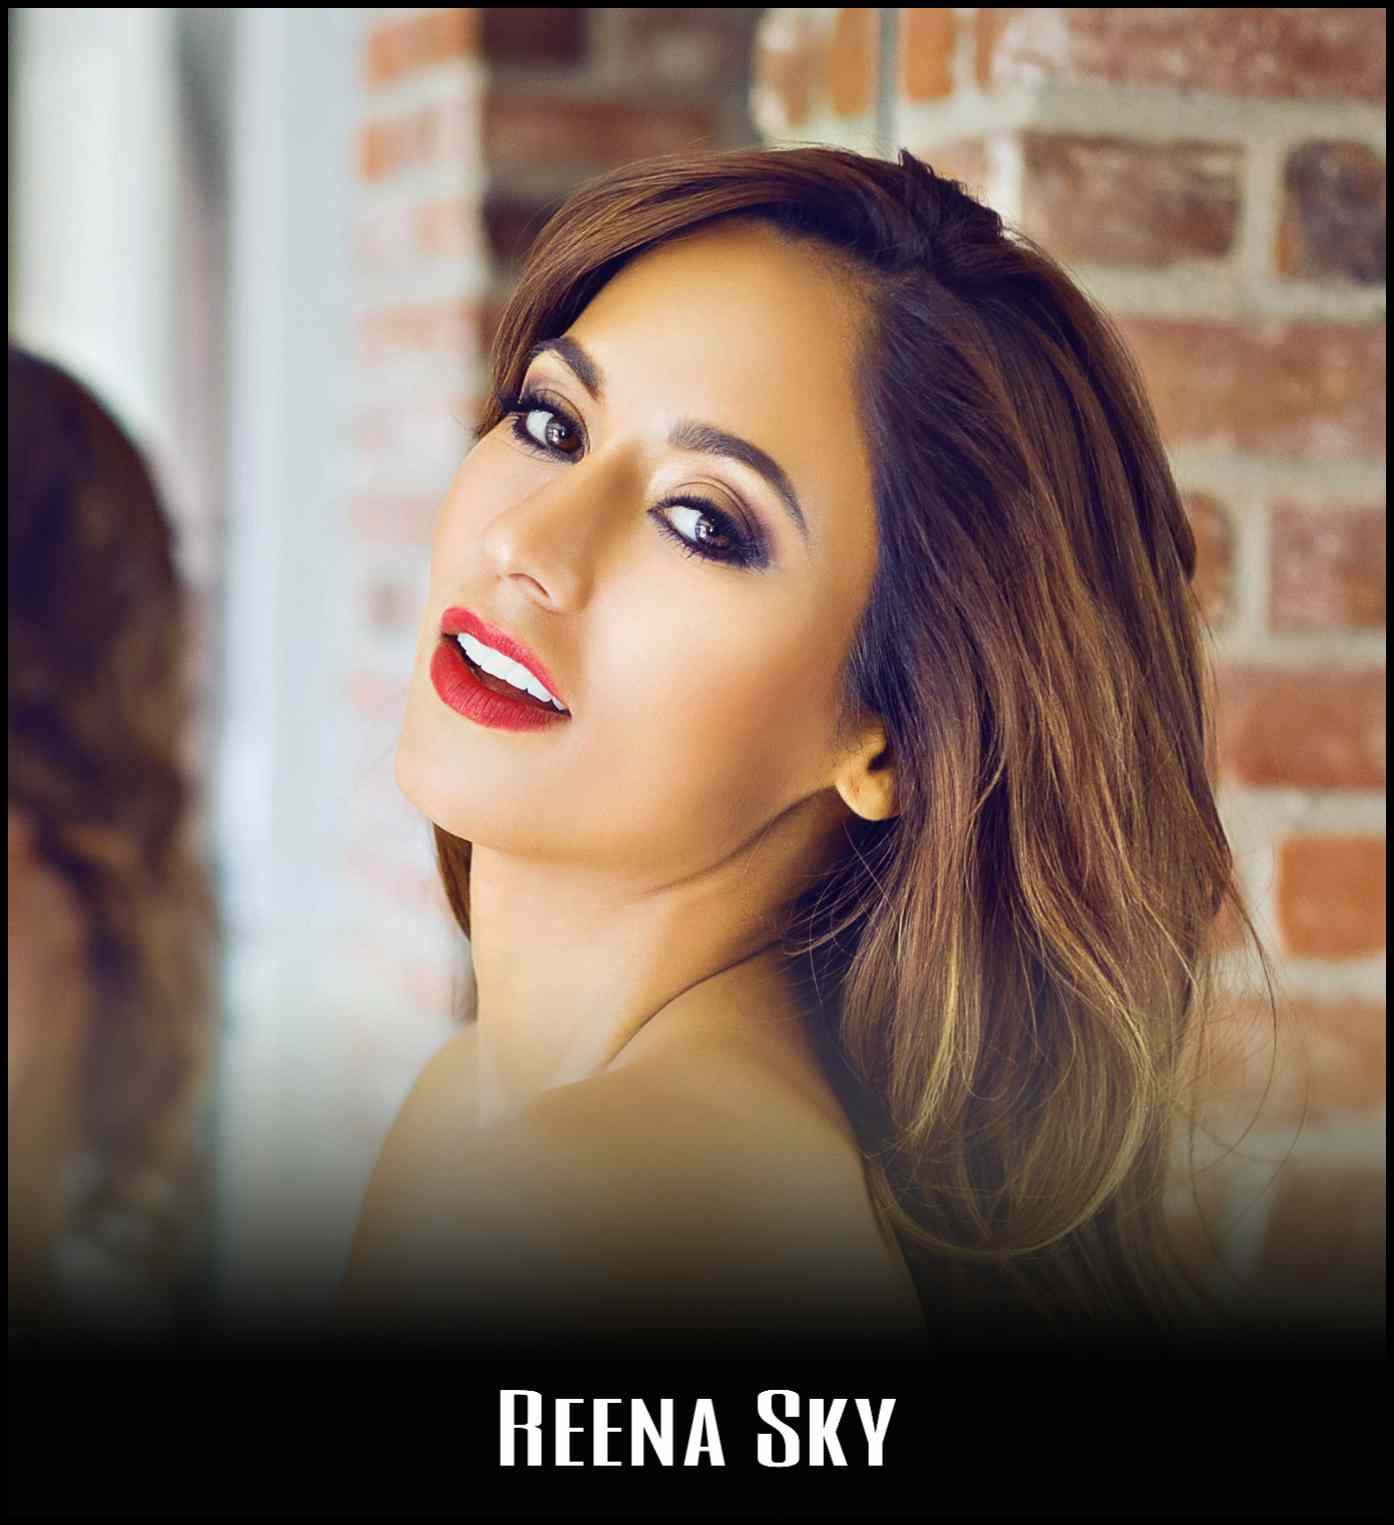 Reena Sky Wiki, Bio, Age, Height, Body Size, Career, Photos